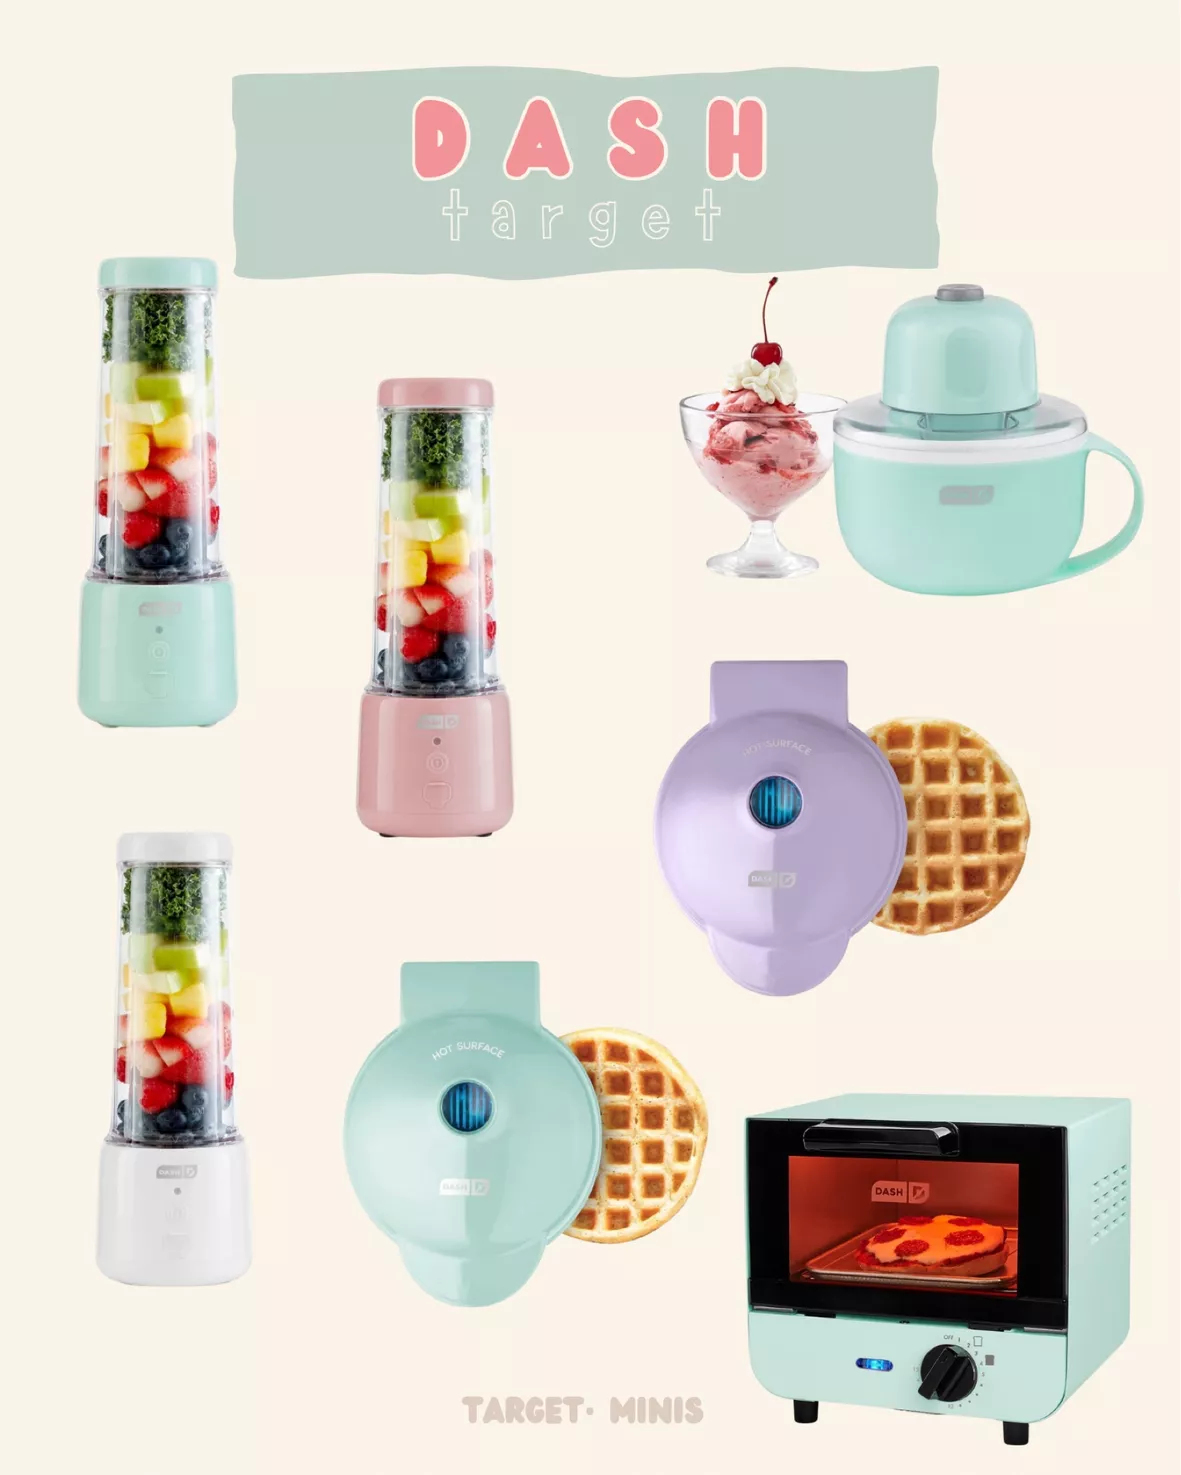 Dash Everyday Ice Cream And Ice Pop Maker : Target